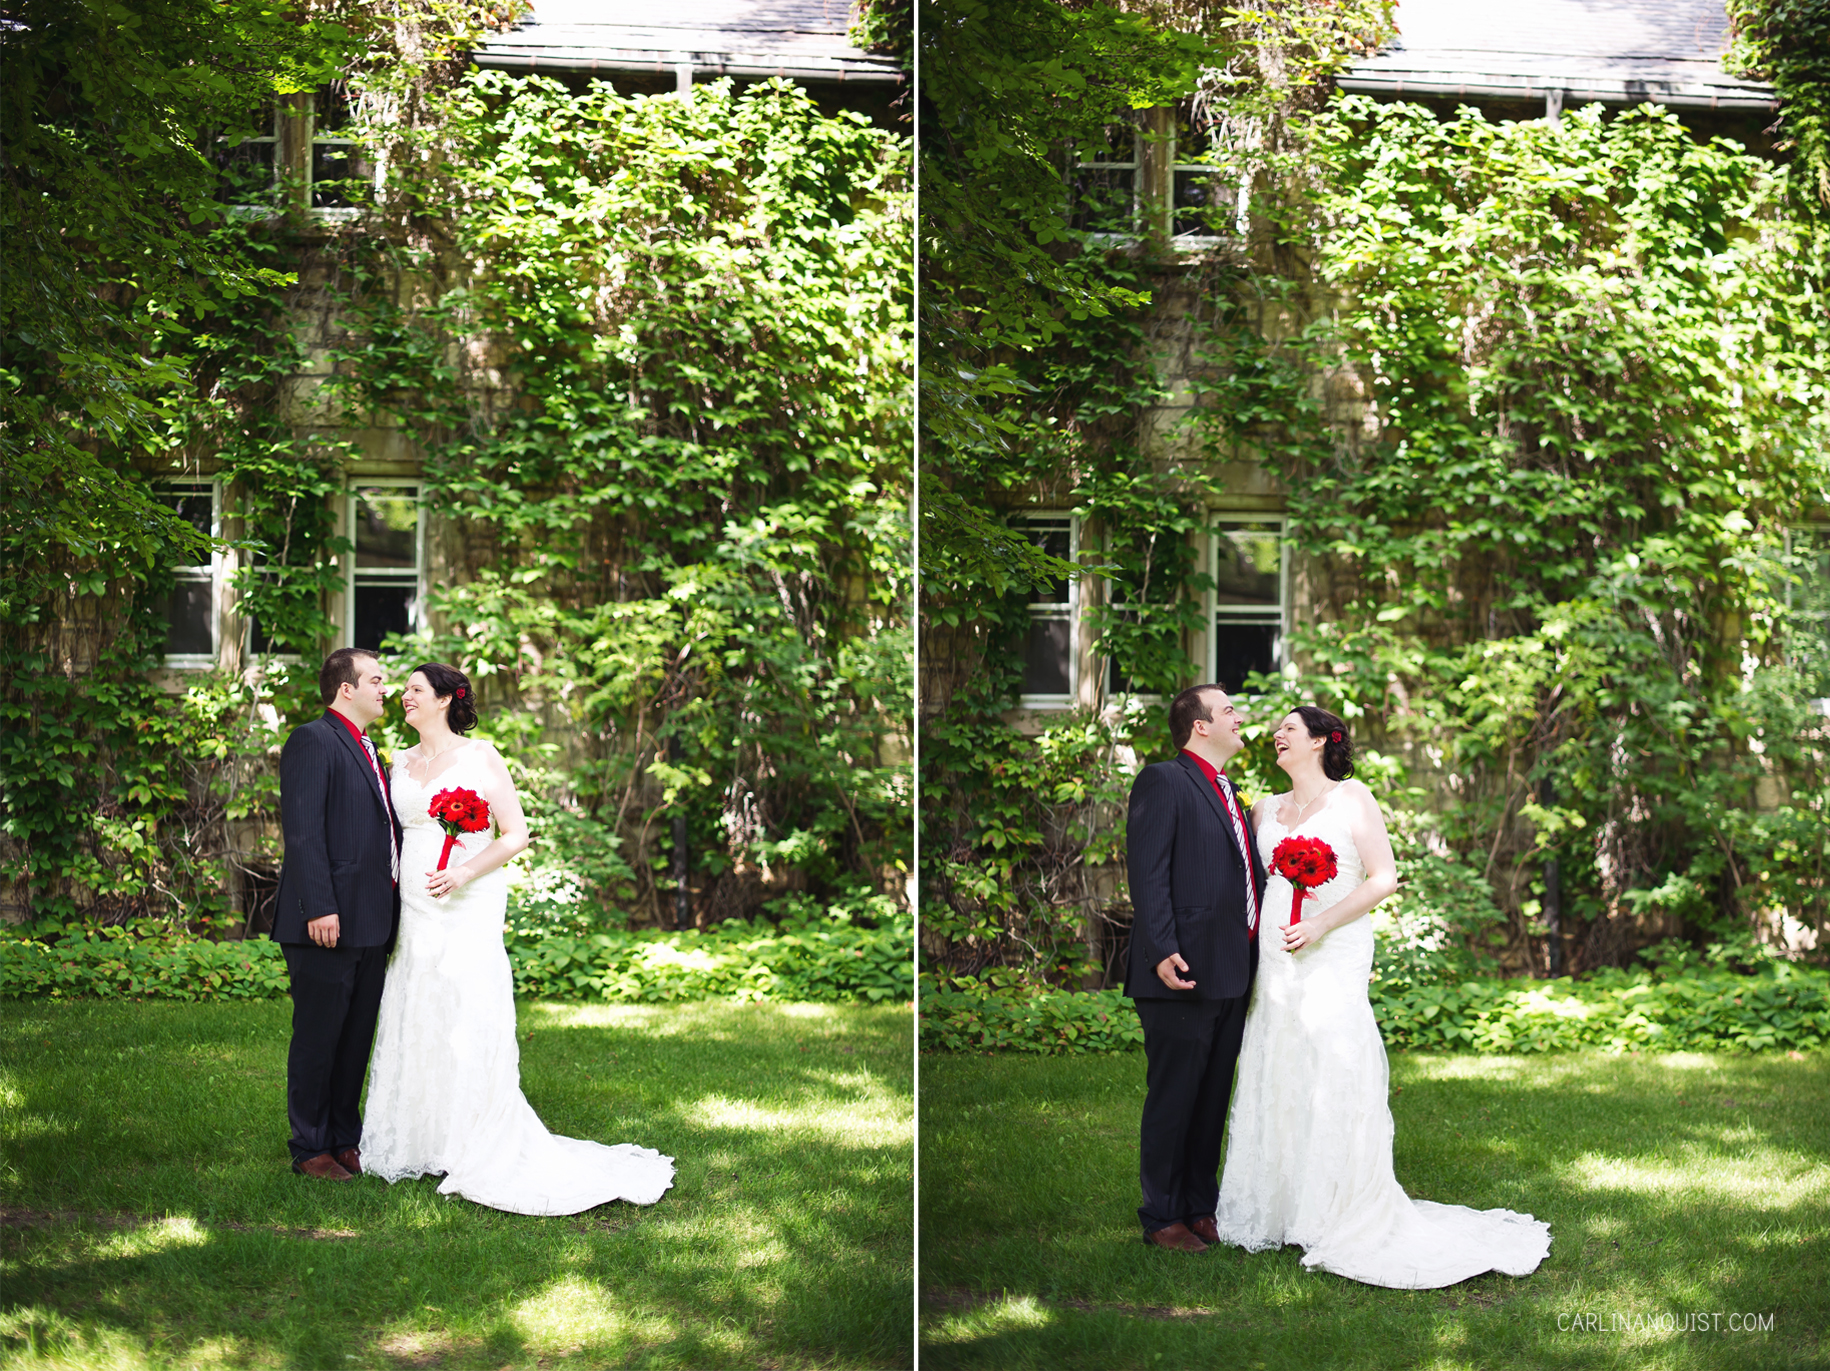 Patrick & Cindy Wedding // Saskatoon Wedding Photographer | Carlin Anquist Photography